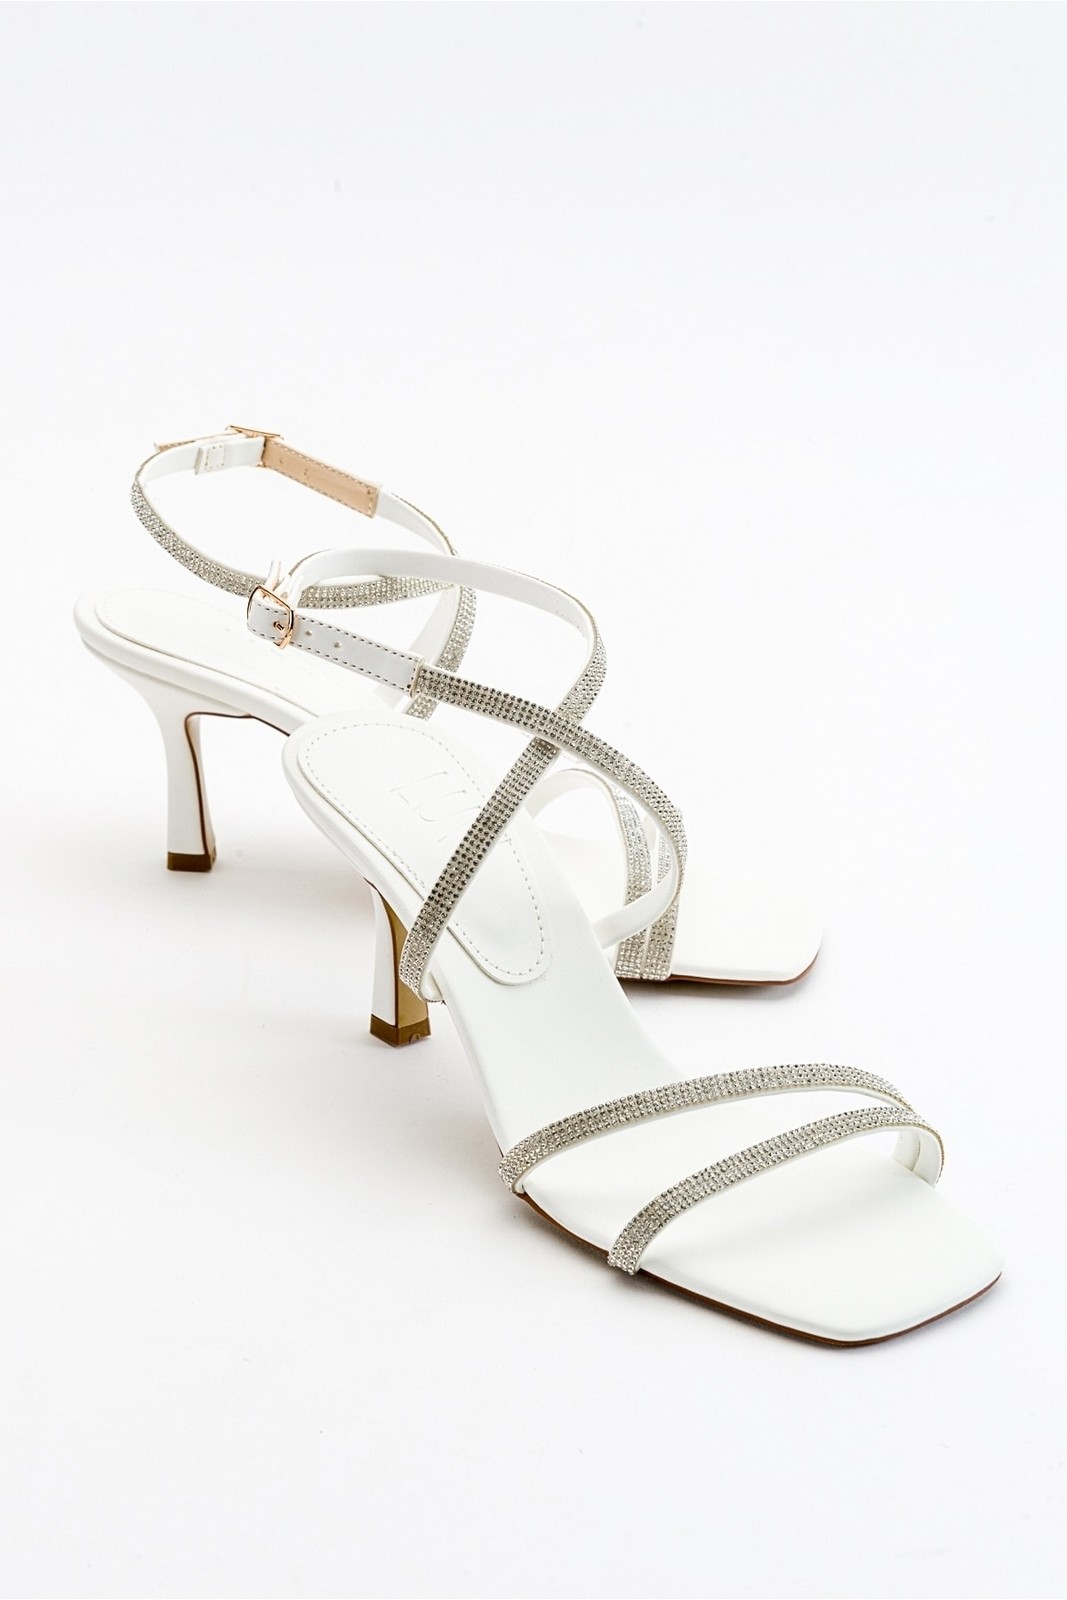 LuviShoes Ruffle White Skin Women's Heeled Shoes